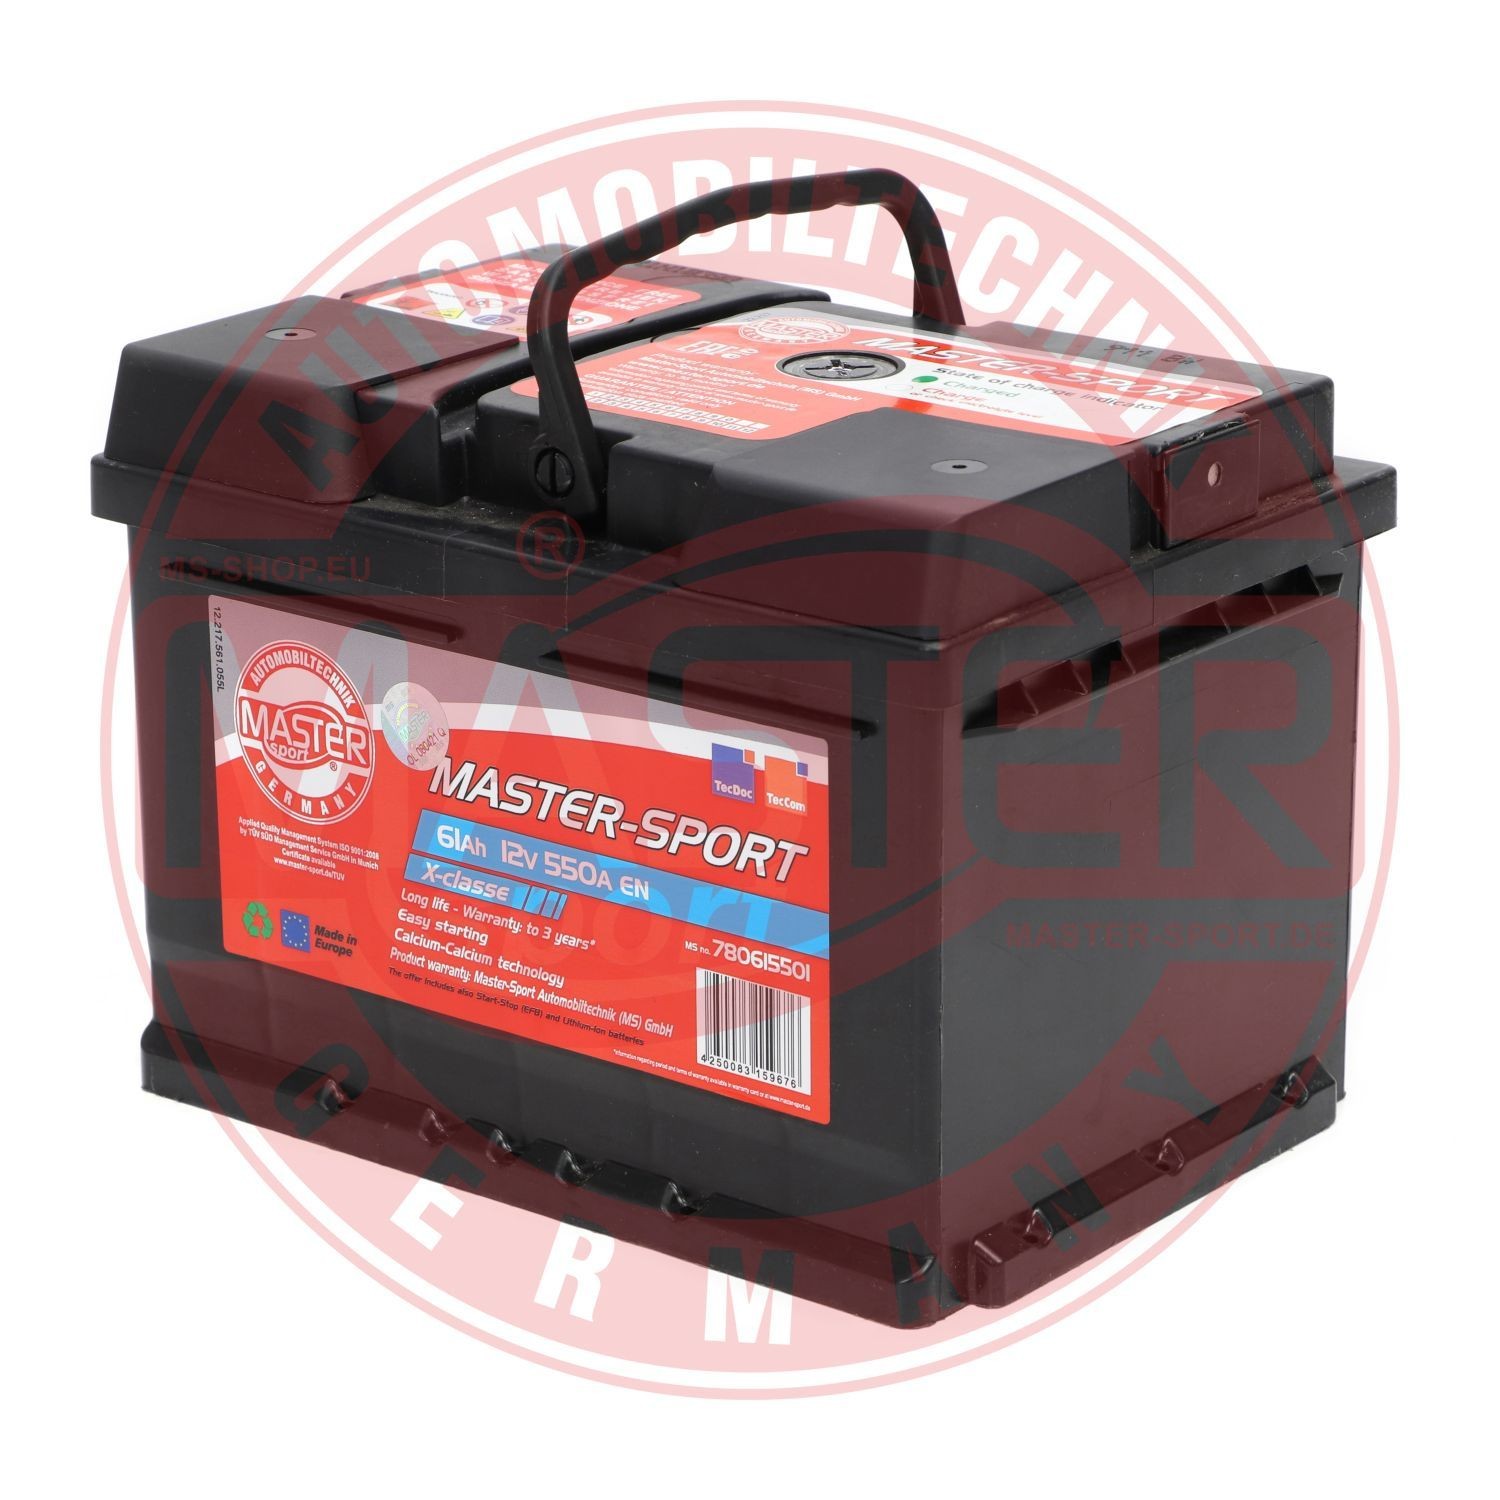 Original 780615501 MASTER-SPORT Car battery DODGE